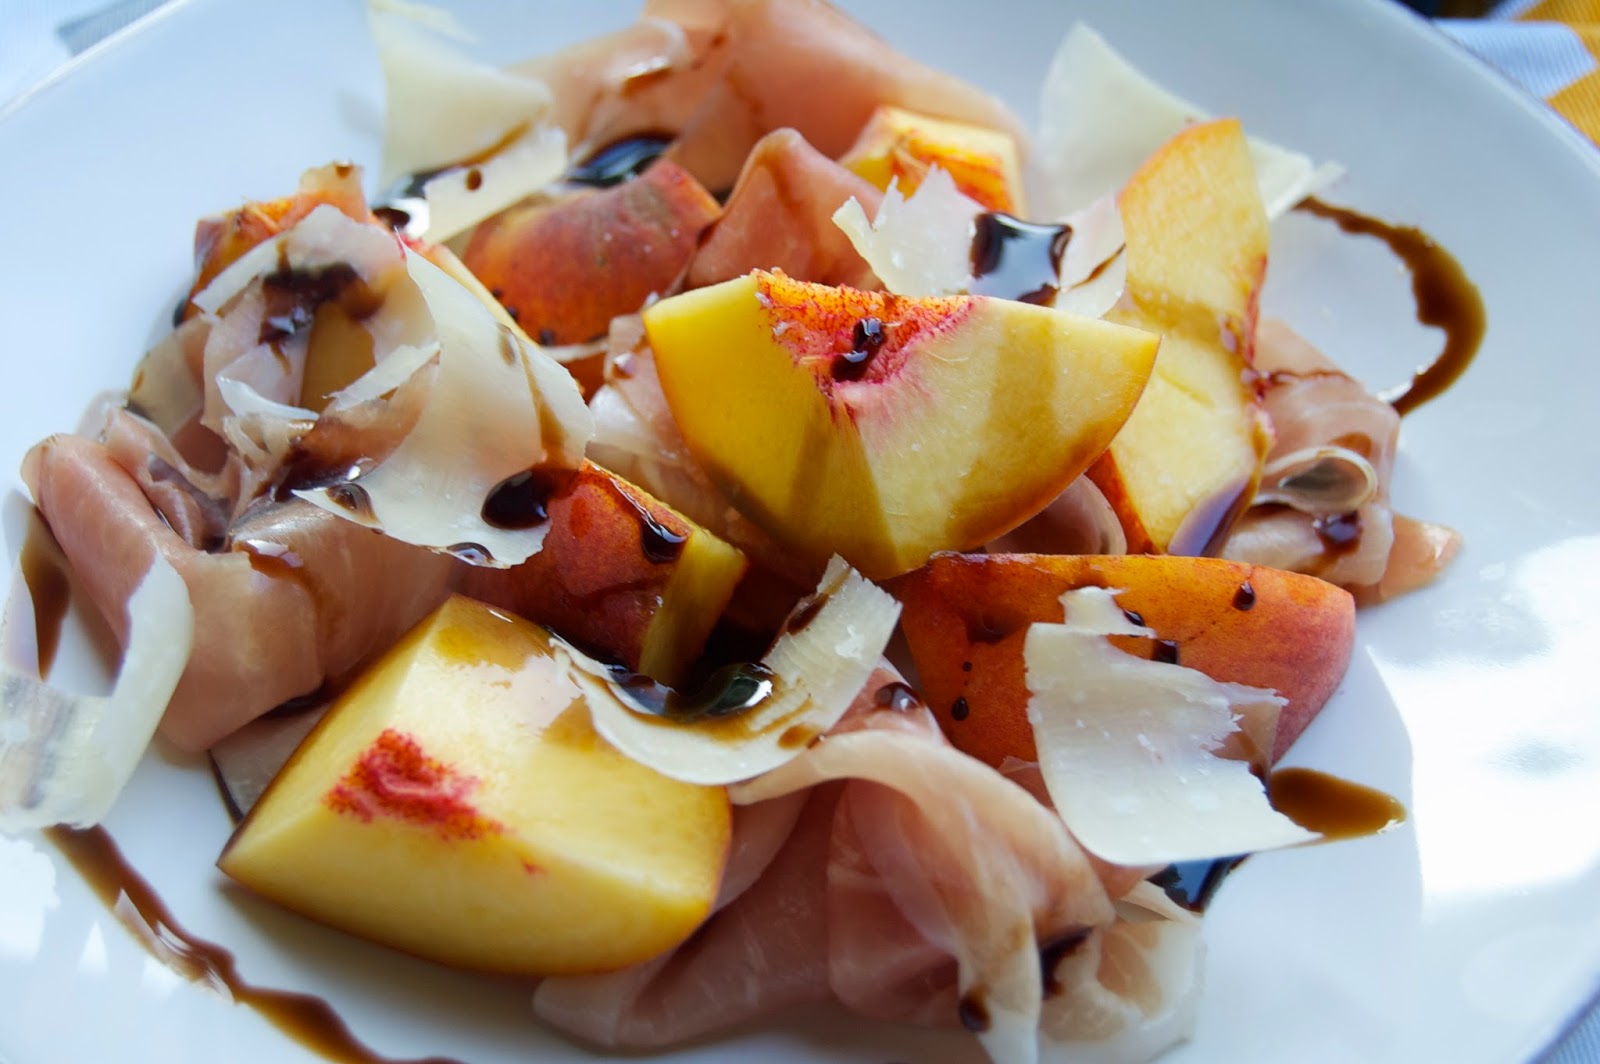 Peaches and Prosciutto with Balsamic Vinegar